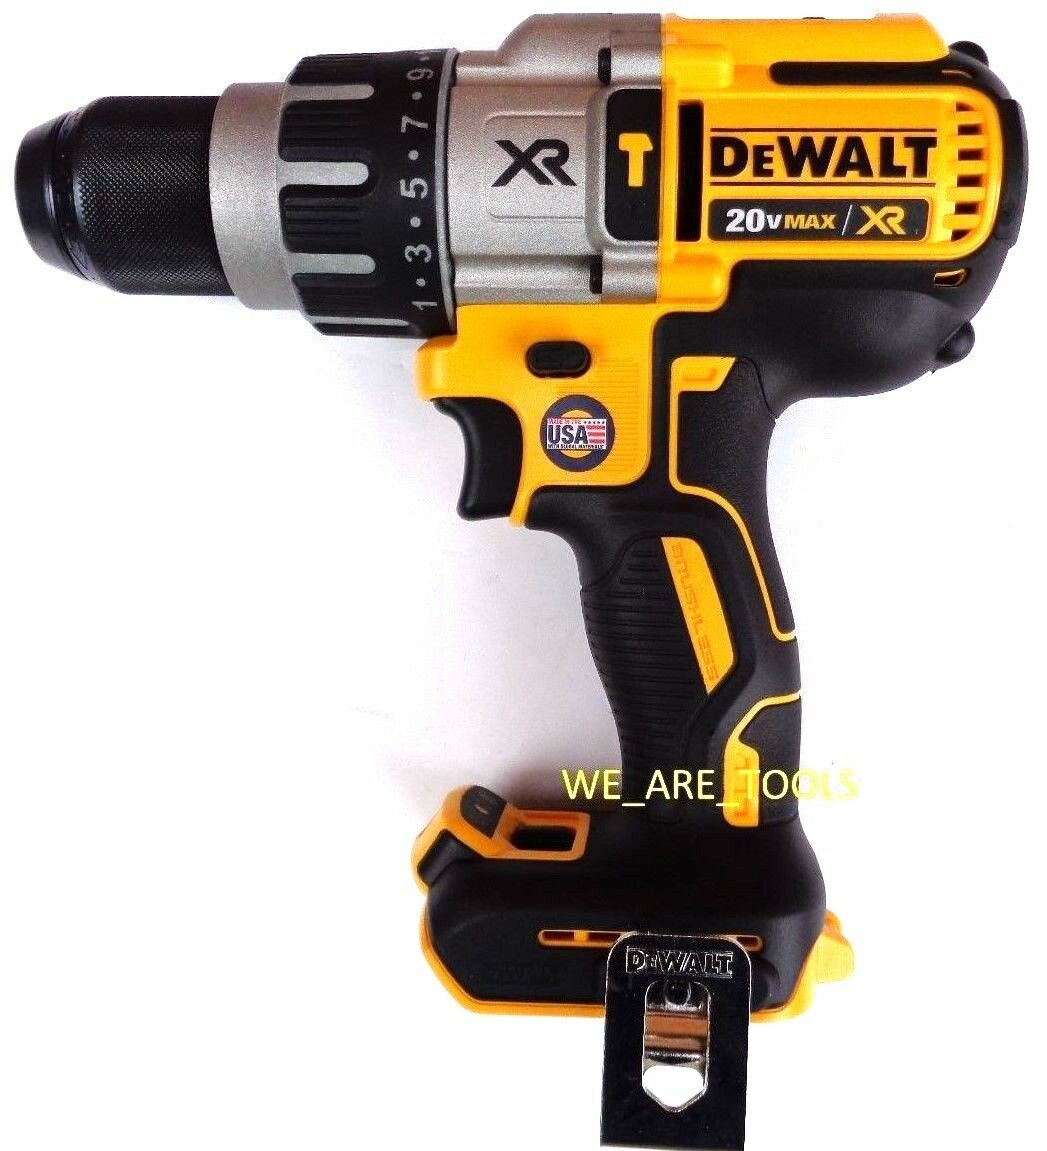 New Dewalt Dcd996 20v Max Xr Brushless 3-speed Cordless 1/2 Hammer Drill 20 Volt